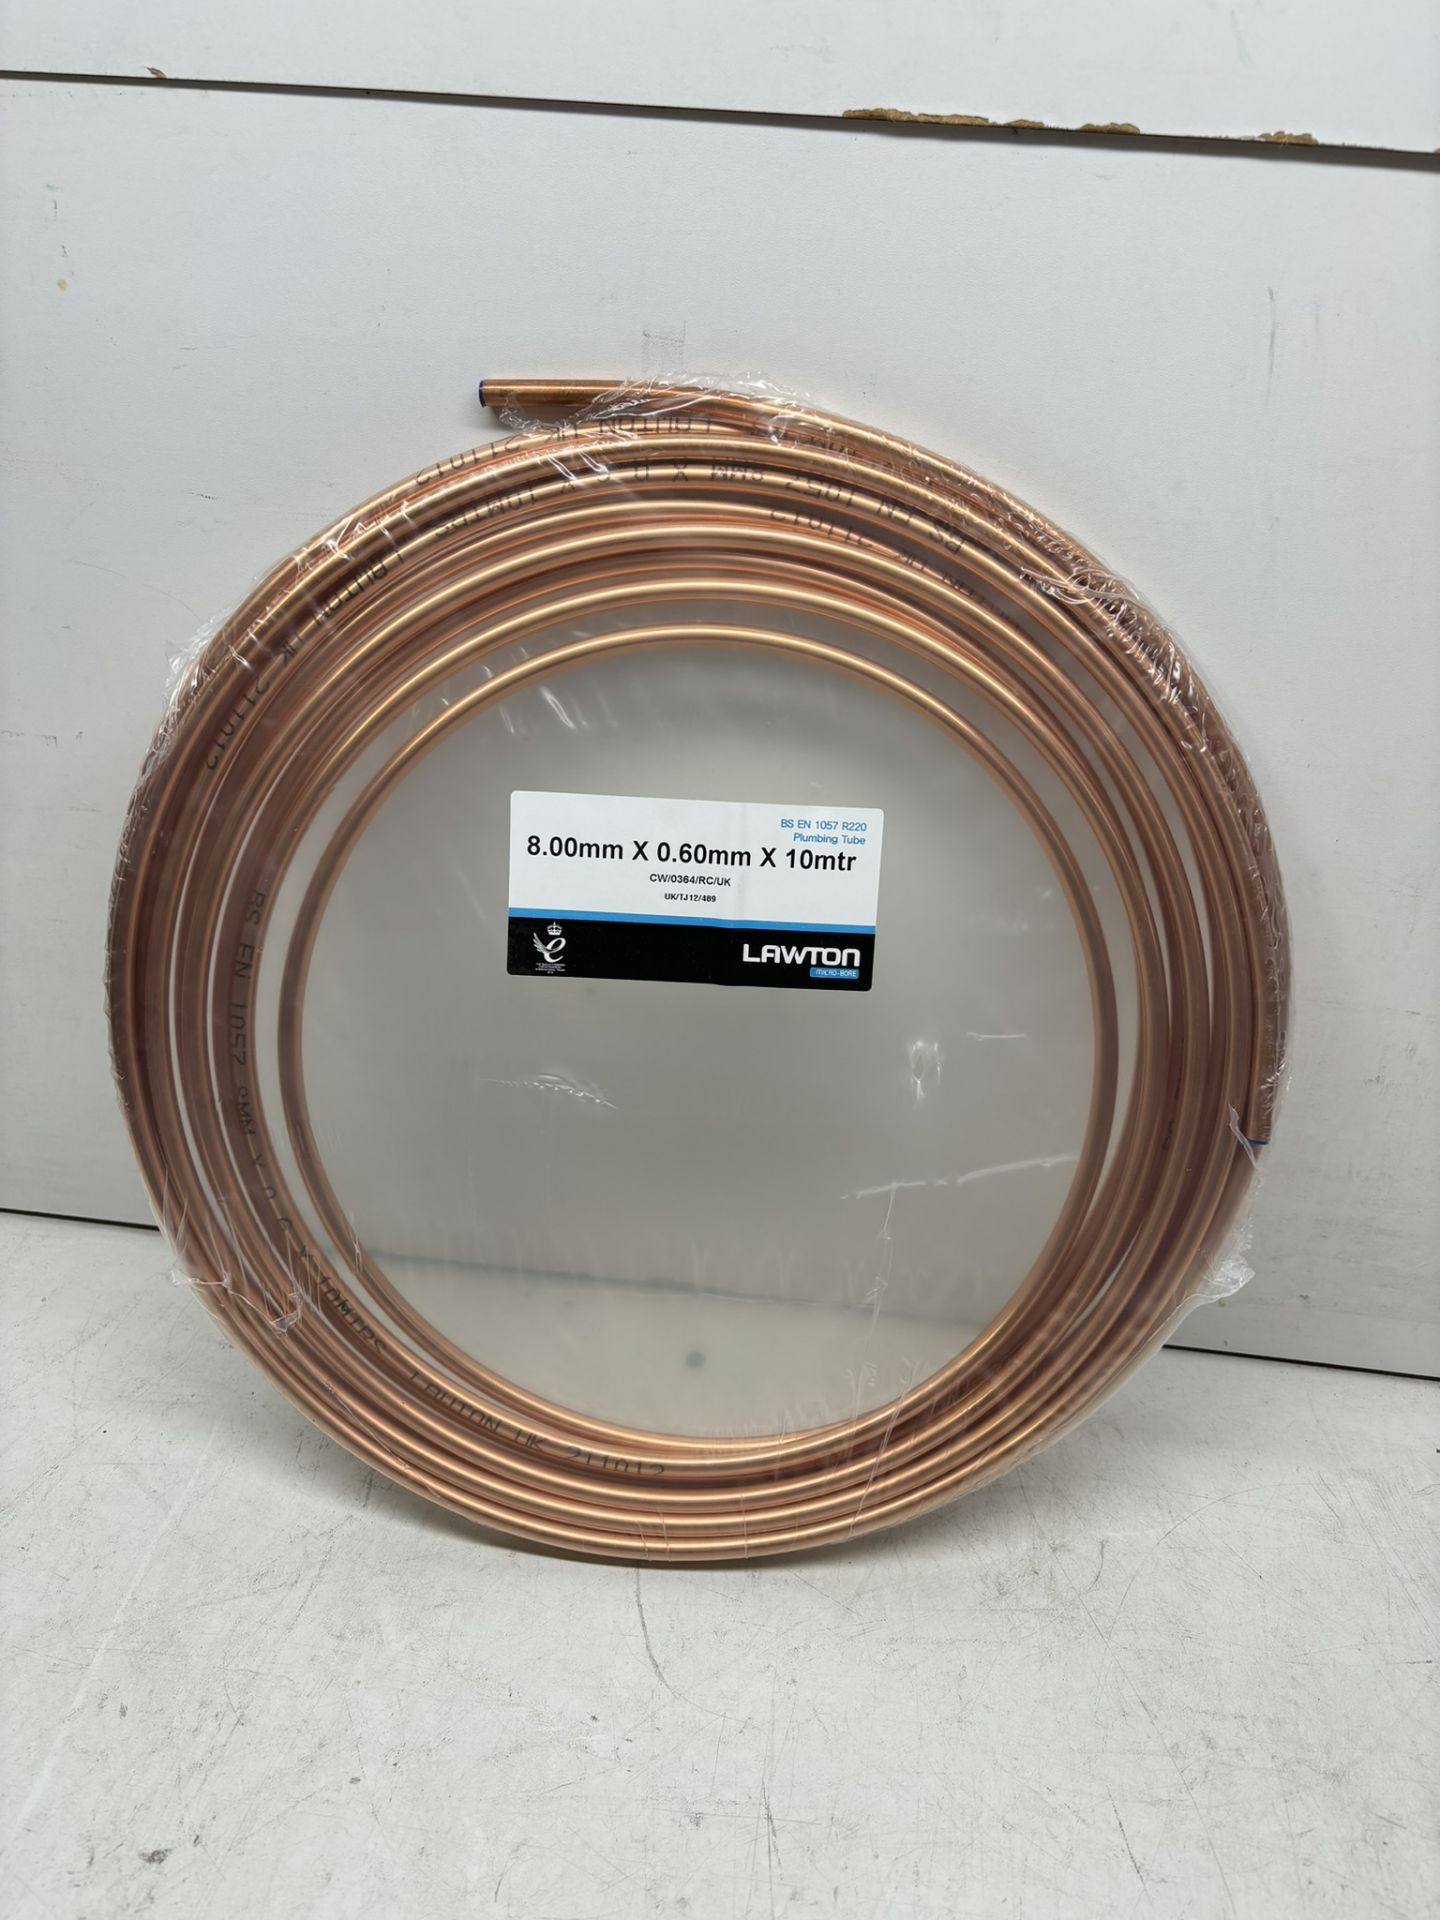 5 x Lawton 8.00mm x 0.60mm x 10Mtr Copper Plumbing Tube Coils - Image 3 of 9